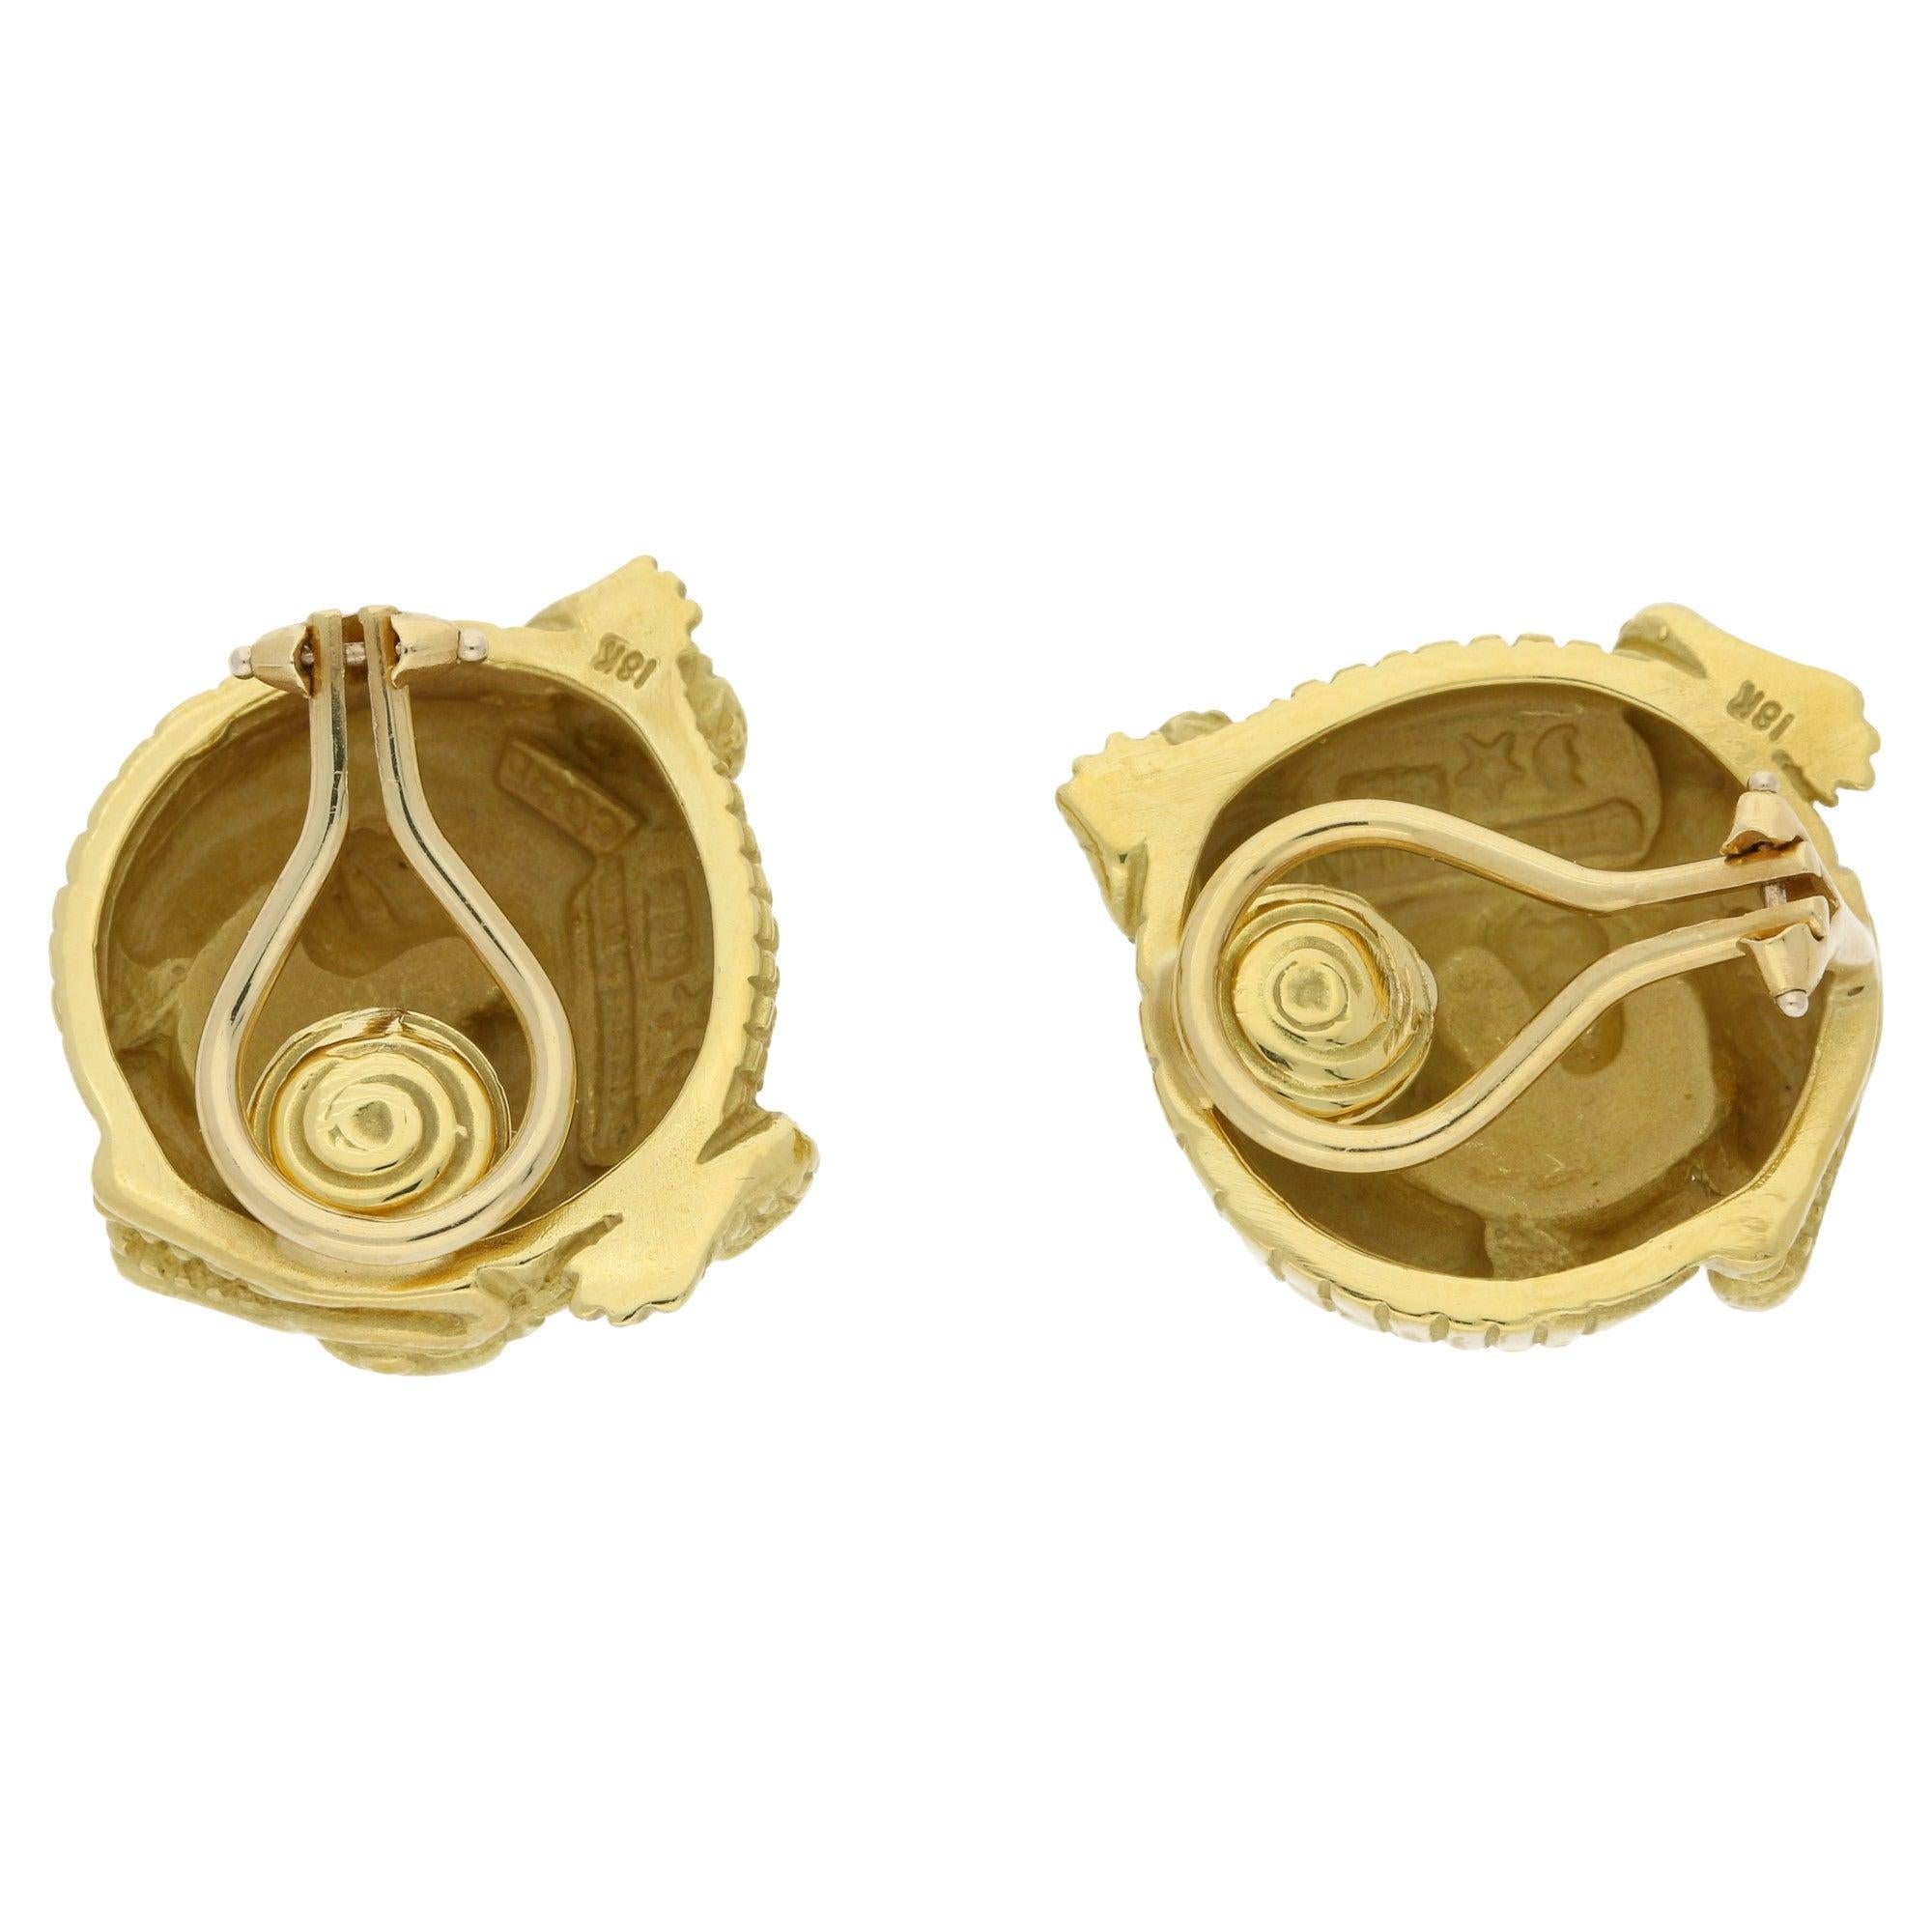 Modernist Alligator Clip-On Earrings Set in 18 Karat Yellow Gold, Signed Kieselstein Cord